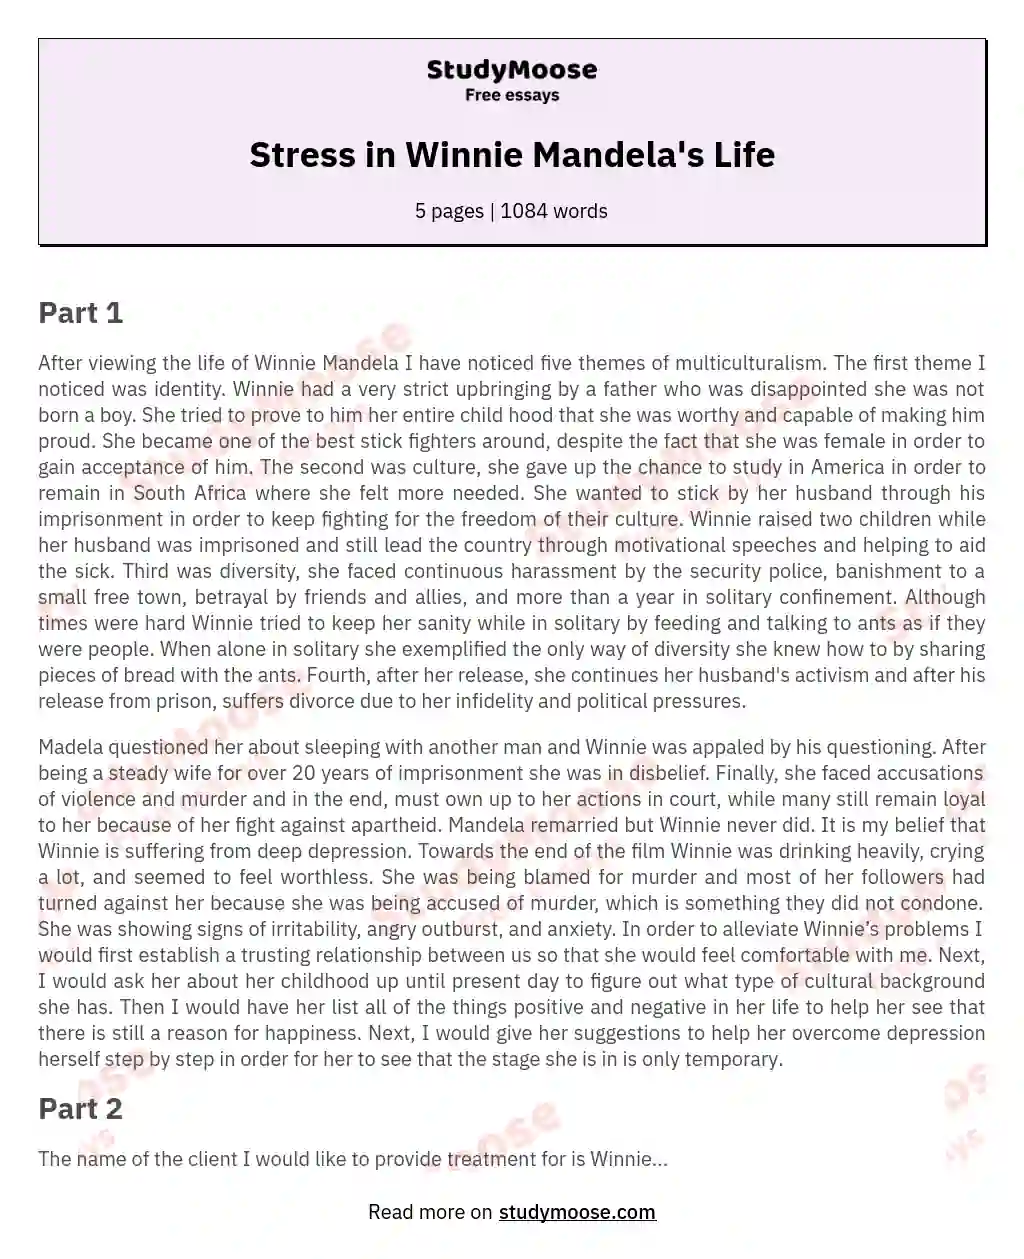 Stress in Winnie Mandela's Life essay